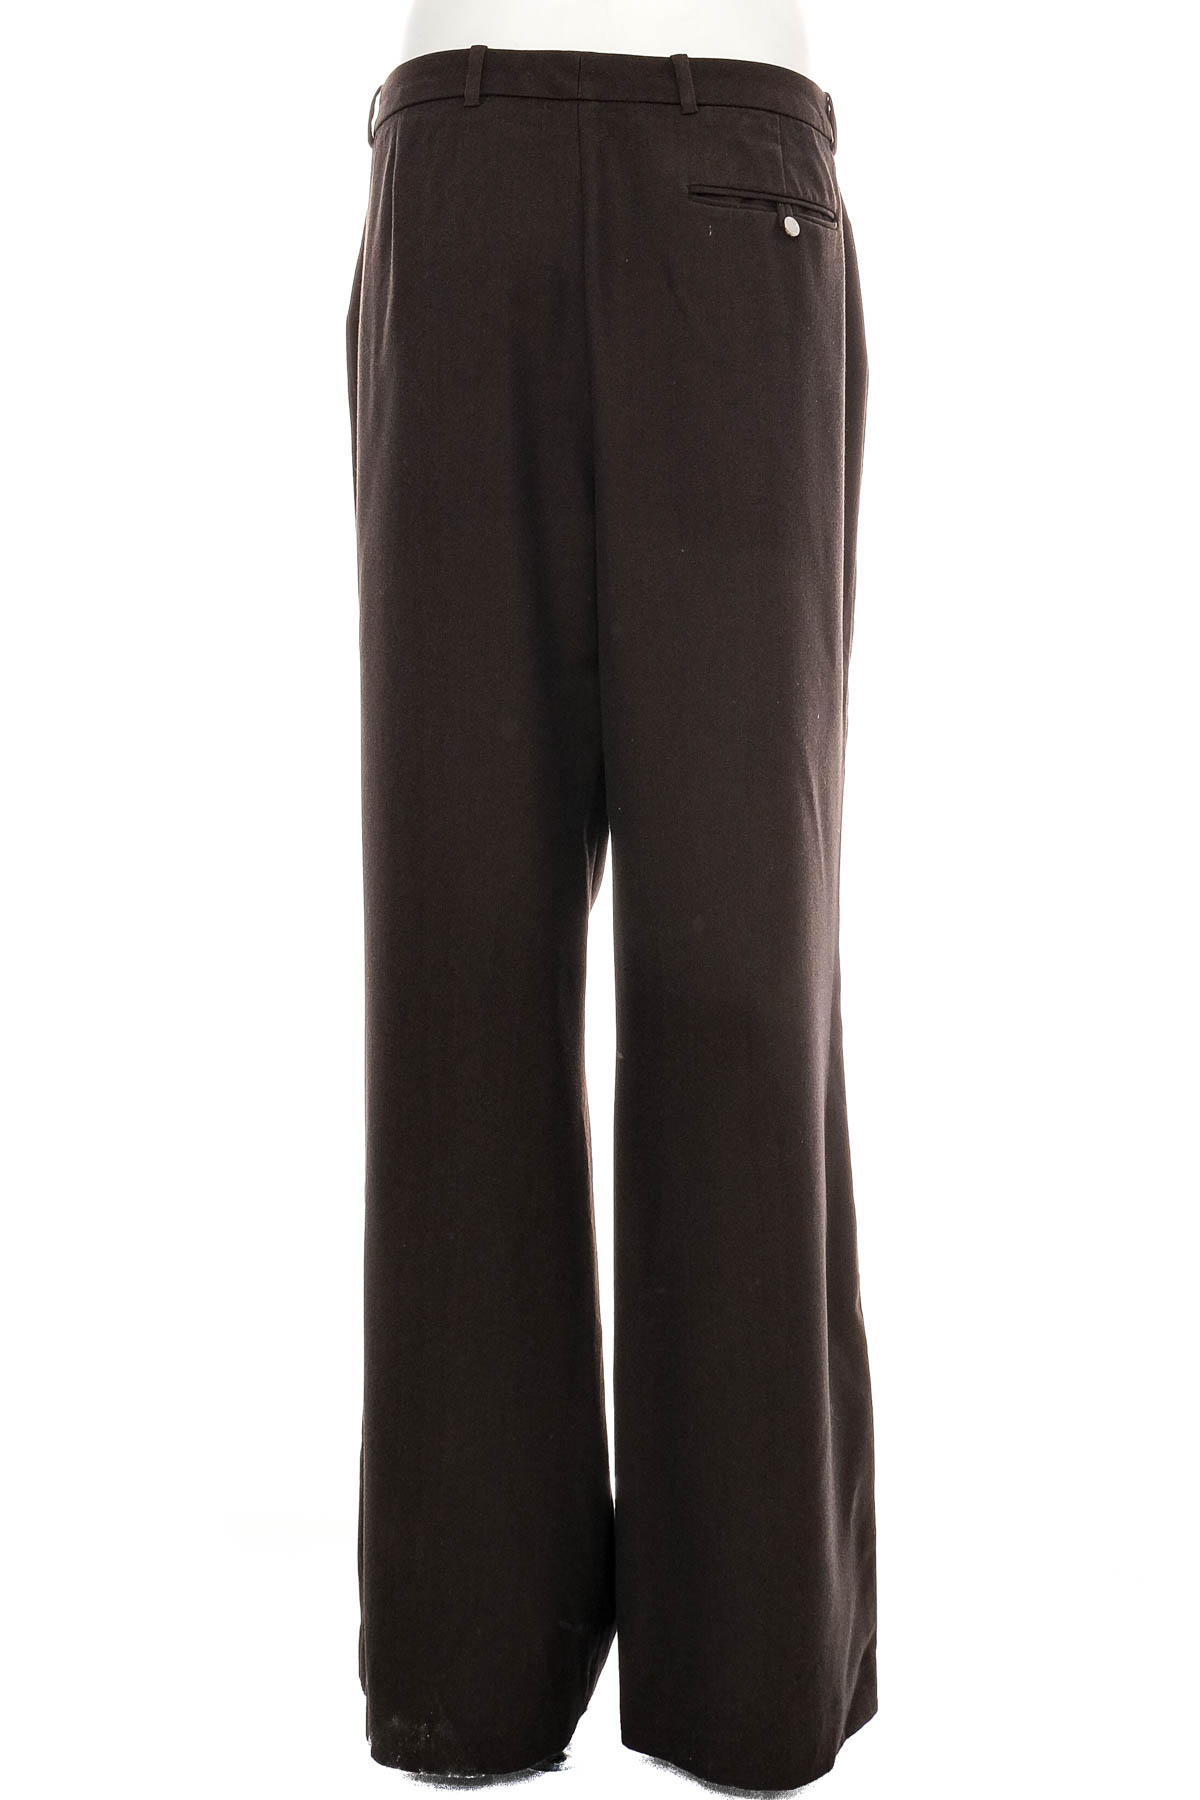 Women's trousers - Calvin Klein - 1